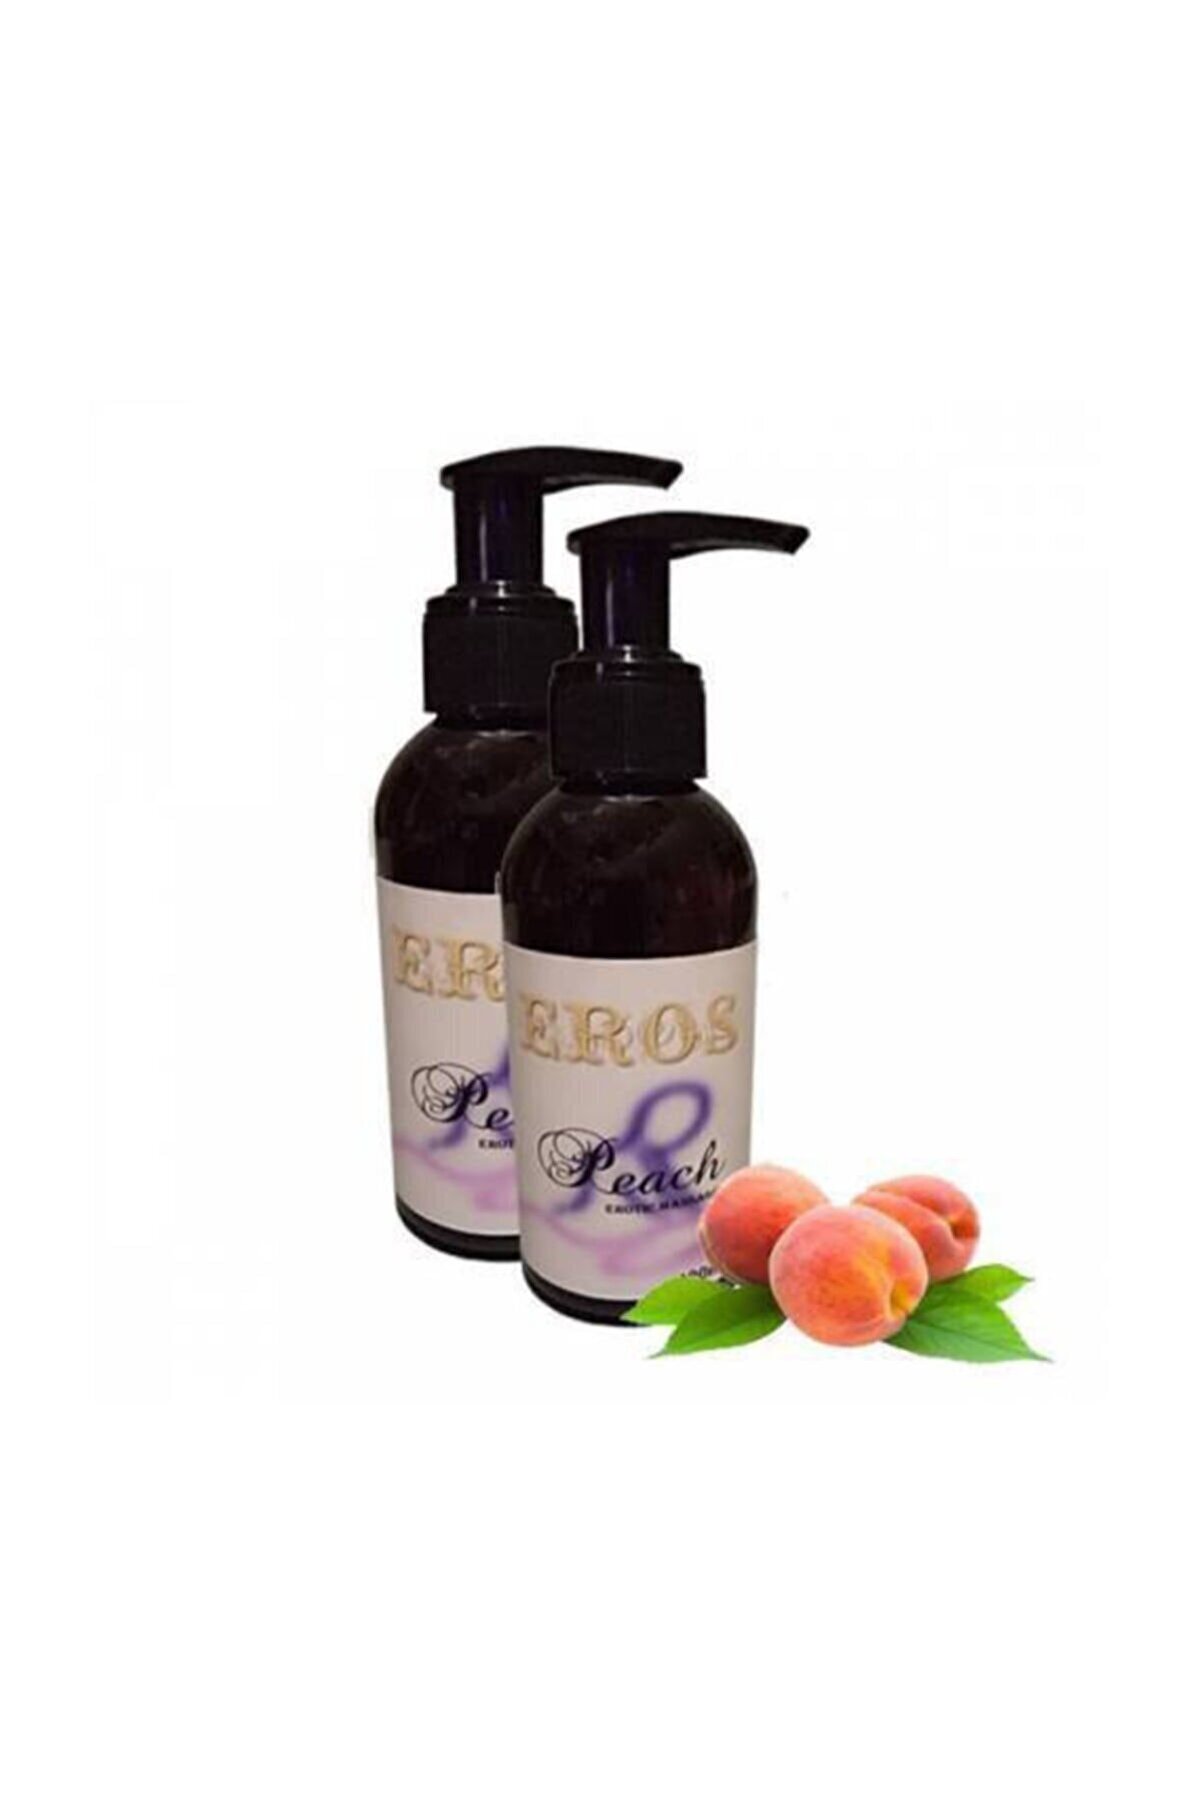 Eros Hologramlı  Peach Erotic Massage Oil 120ml Şeftali Kokulu Erotik Masaj Yağı 2  Adet